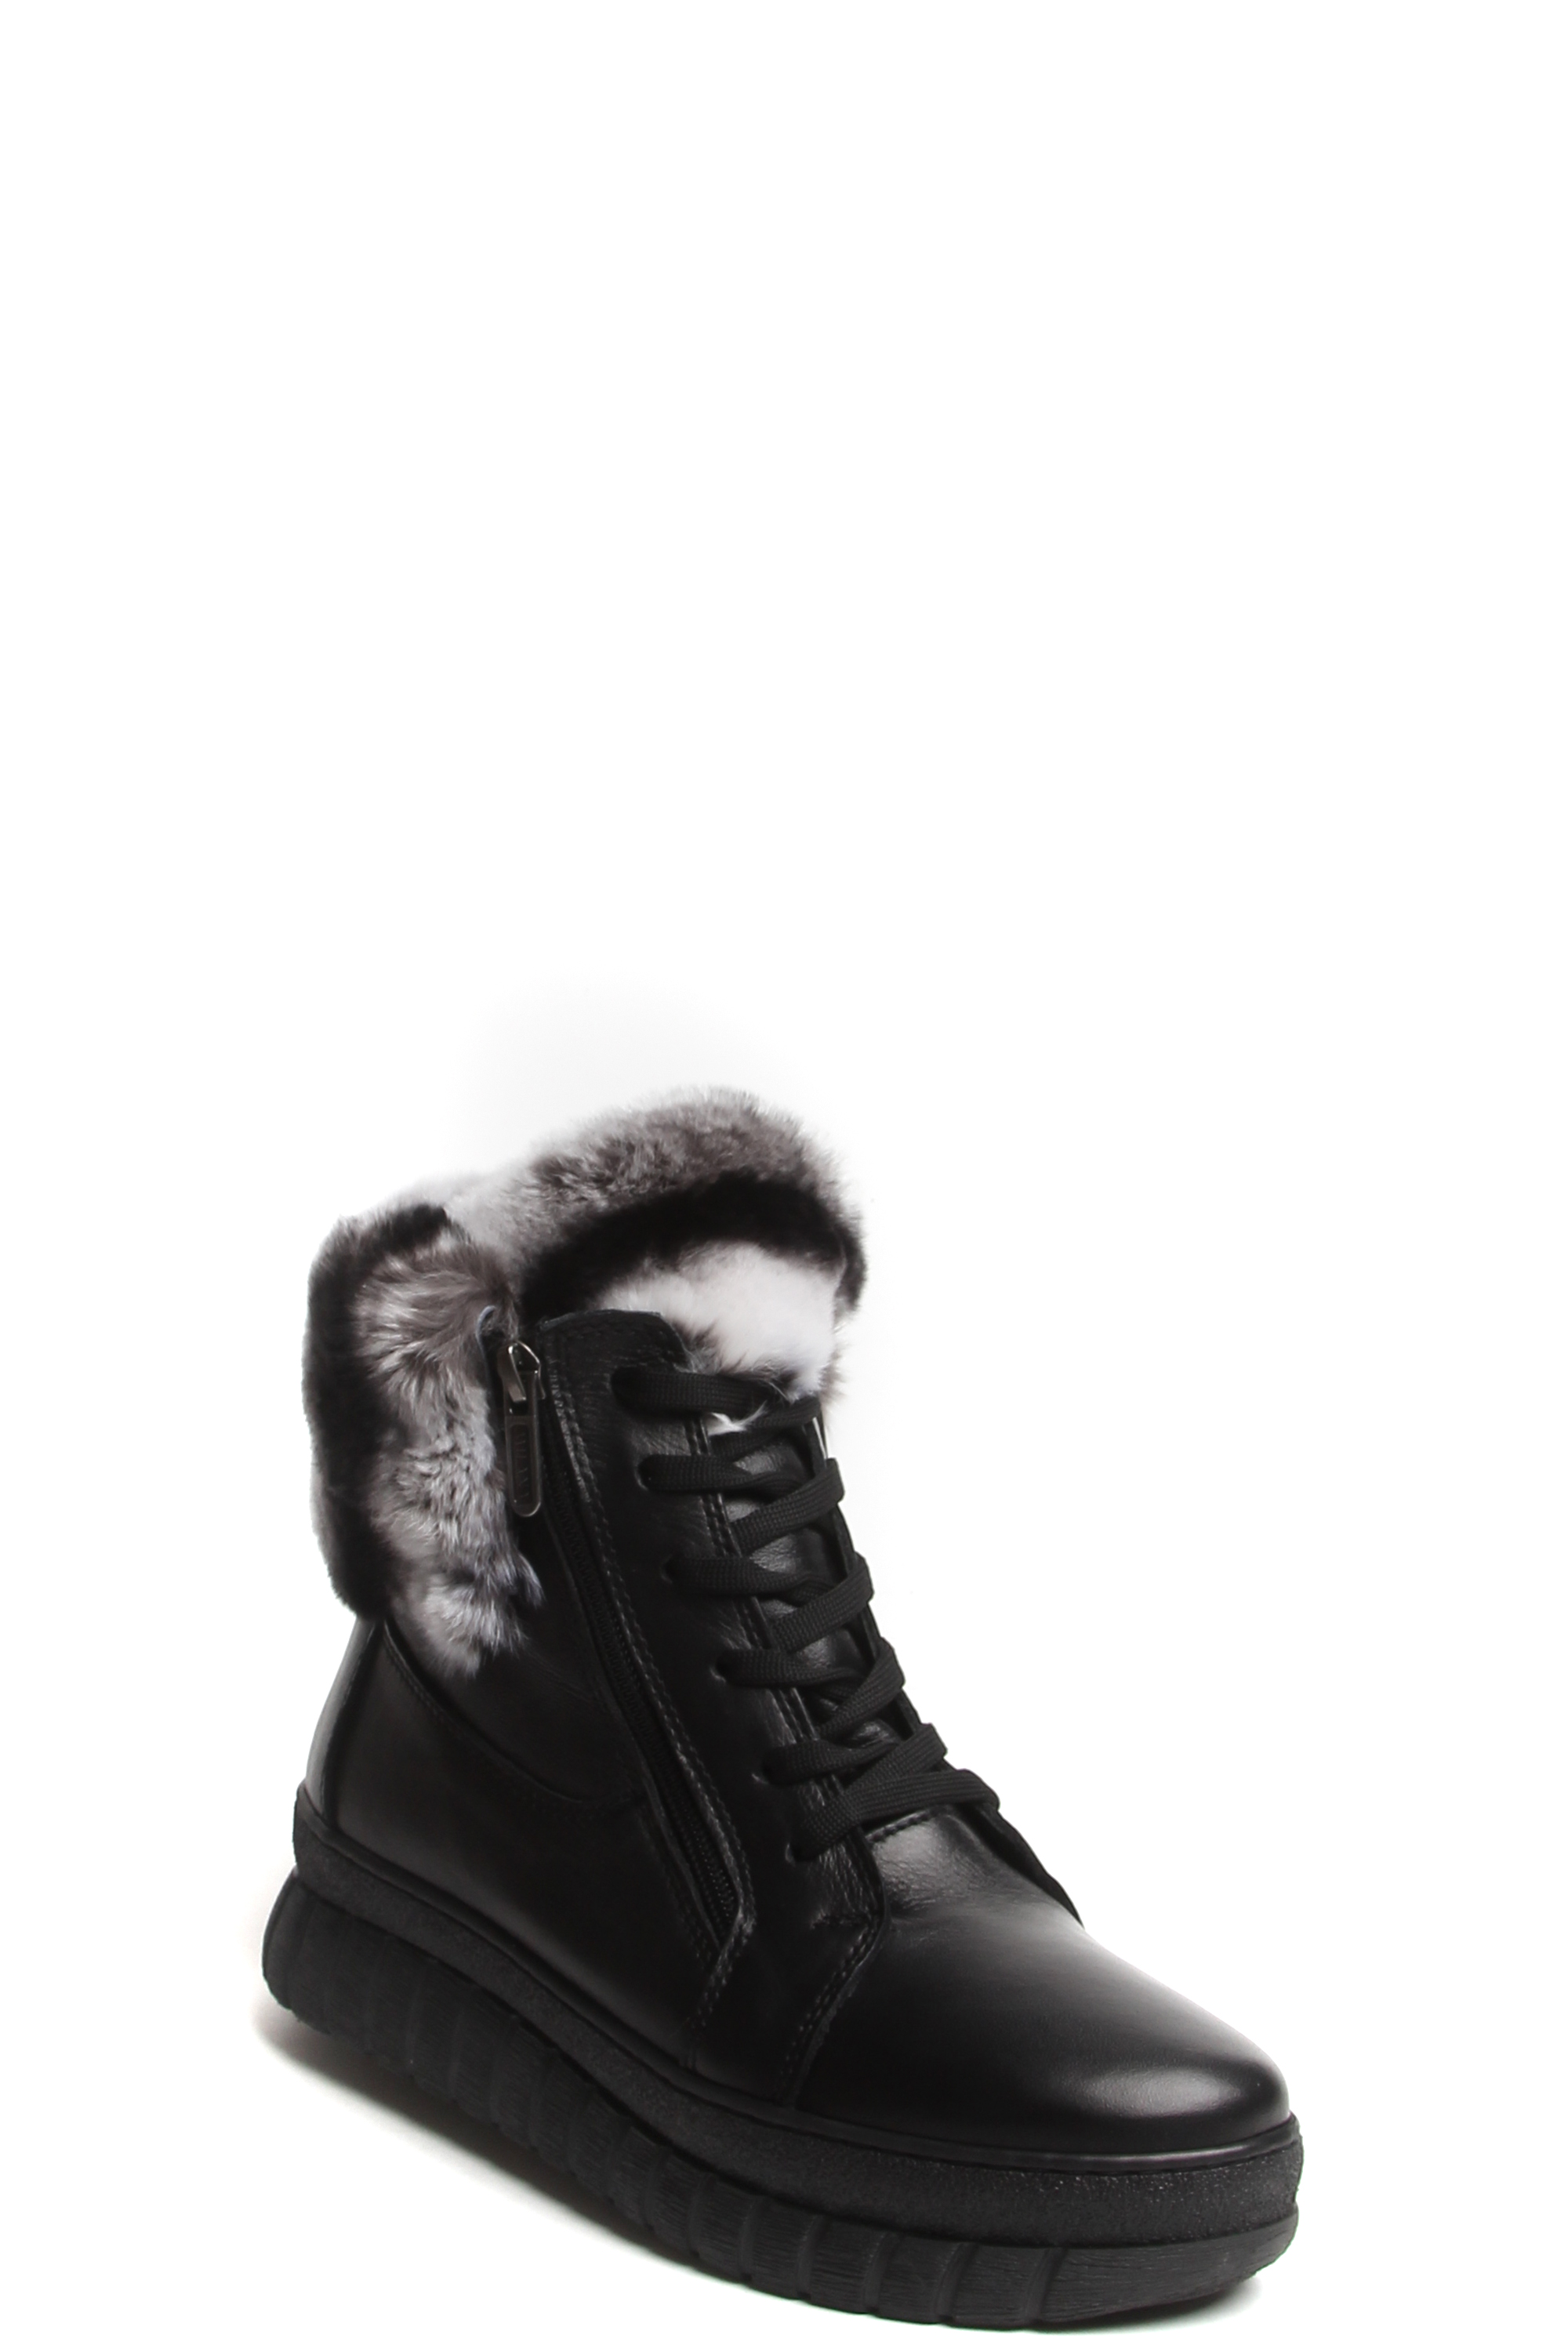 182370-1-110F ботинки  взрослый  жен. зимн. натуральная кожа/натуральный мех/термоэластопласт черный